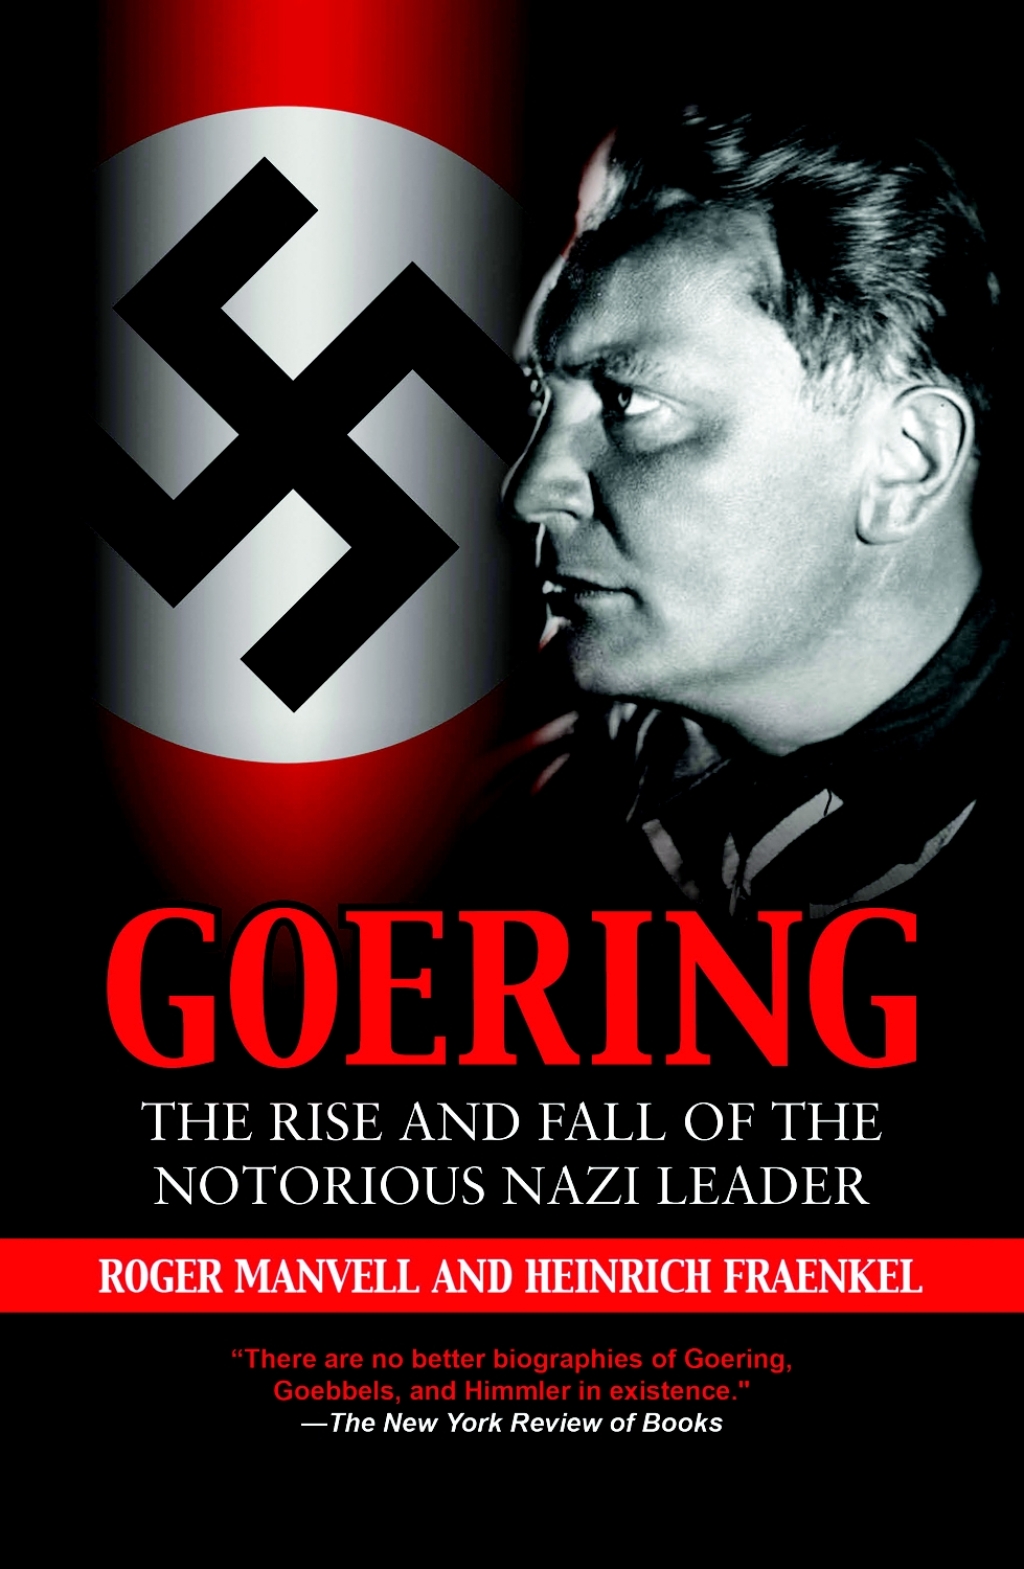 Goering (eBook) - Roger Manvell; Heinrich Fraenkel,